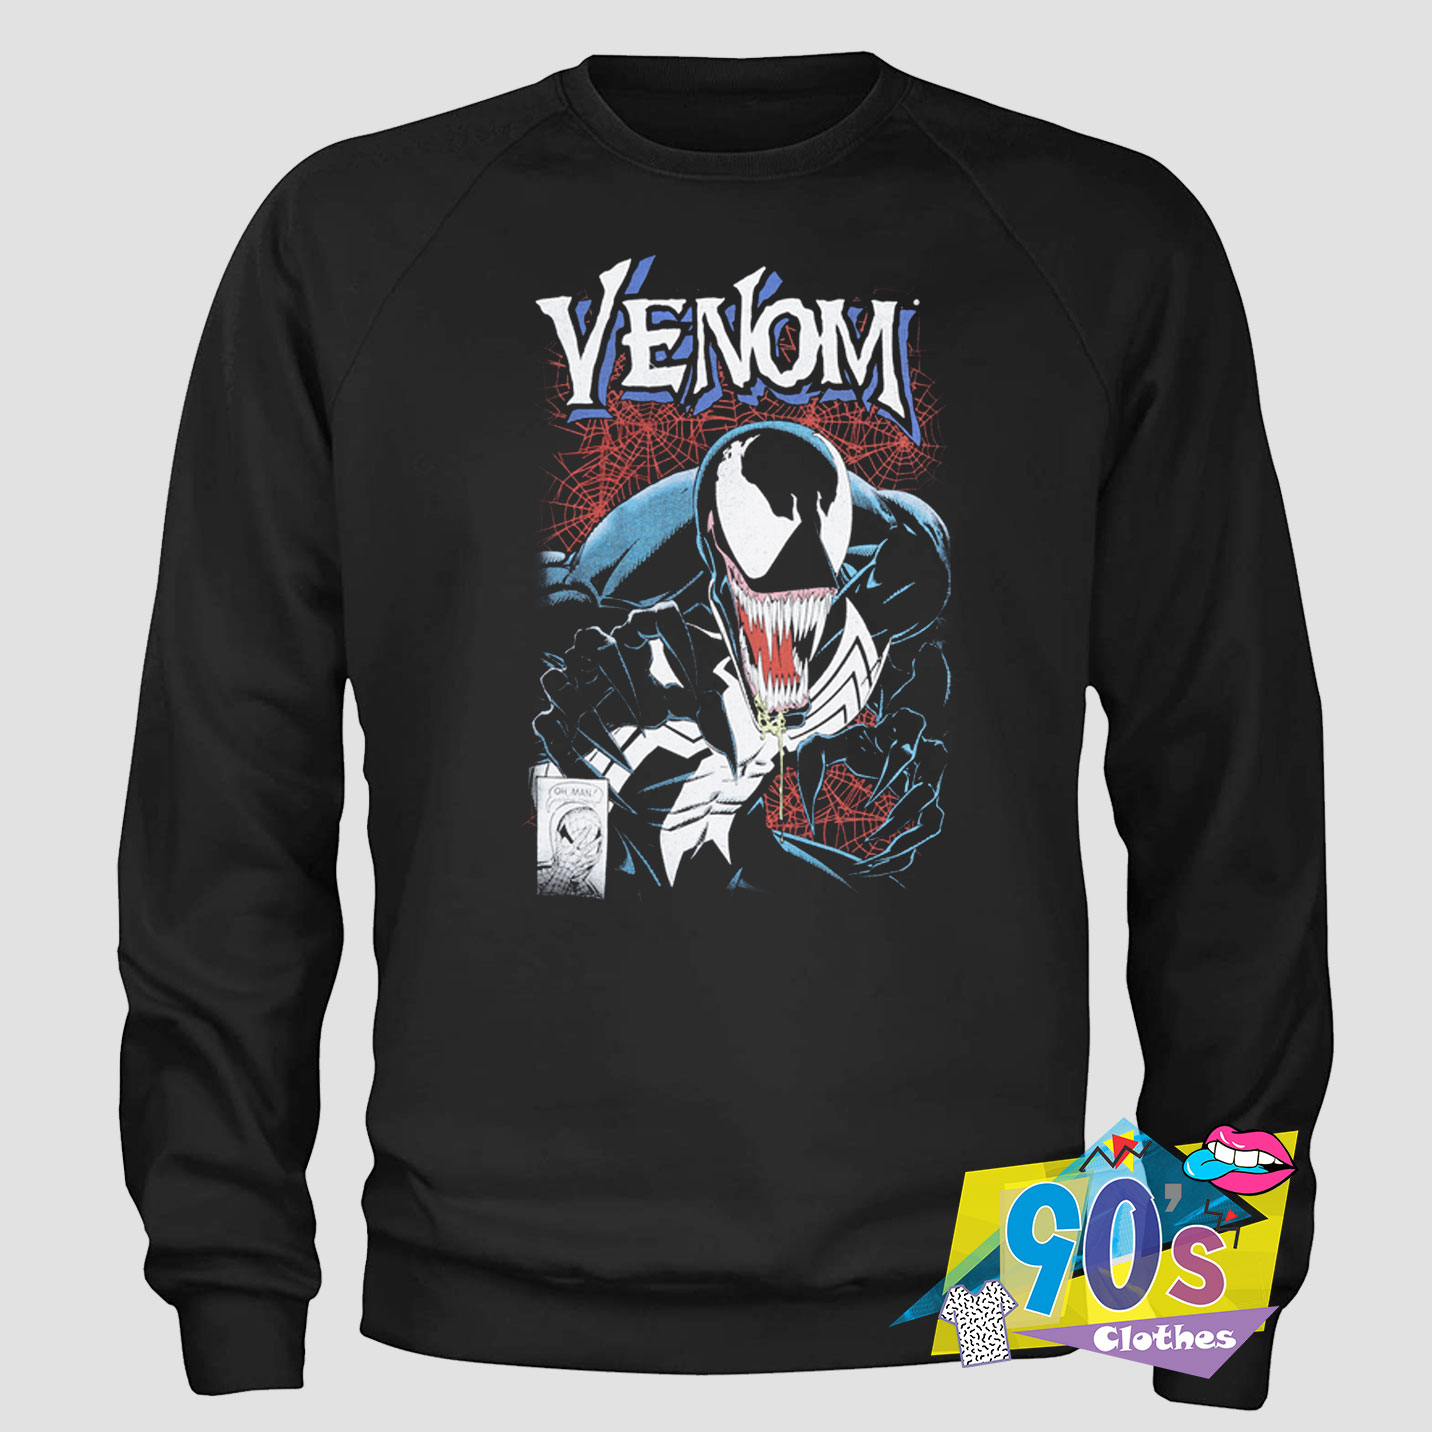 Retro Marvel Venom Sweatshirt On Sale 